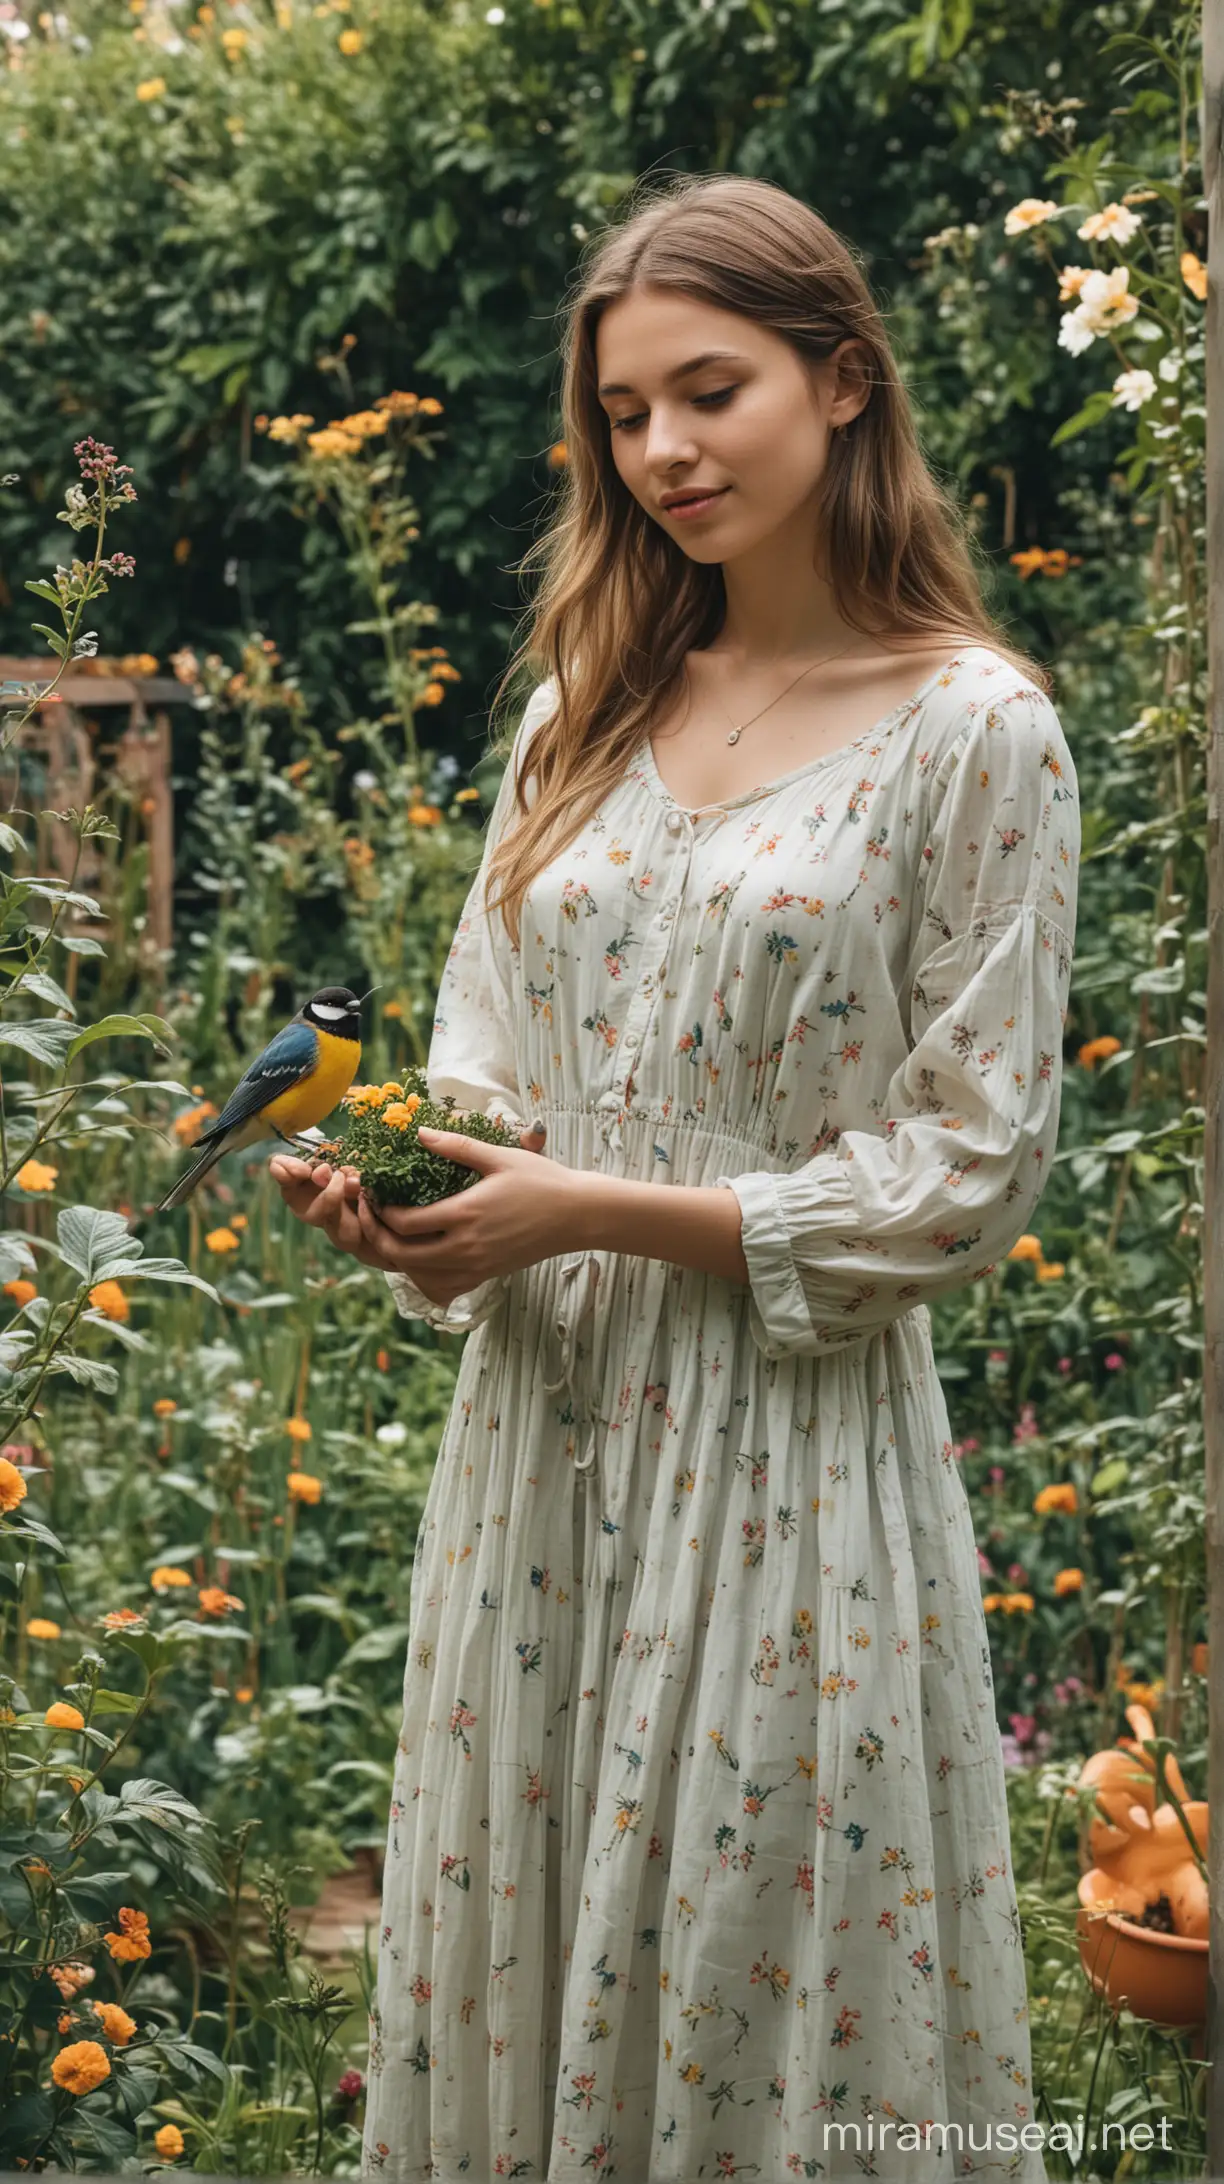 Tranquil Girl Enjoying Serene Garden Moment with Bird